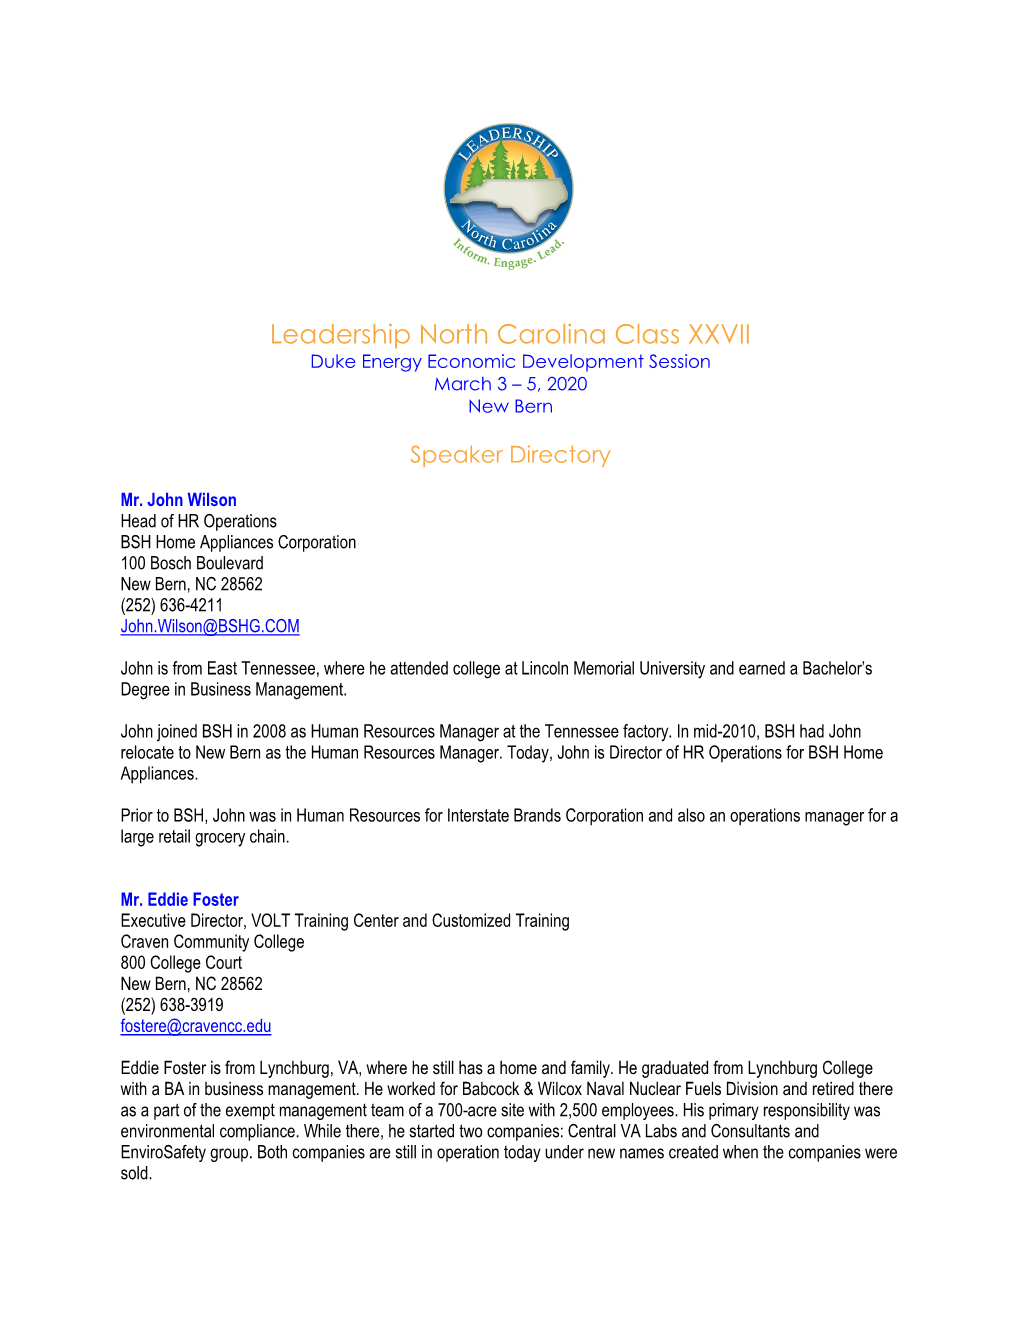 Leadership North Carolina Class XXVII Duke Energy Economic Development Session March 3 – 5, 2020 New Bern